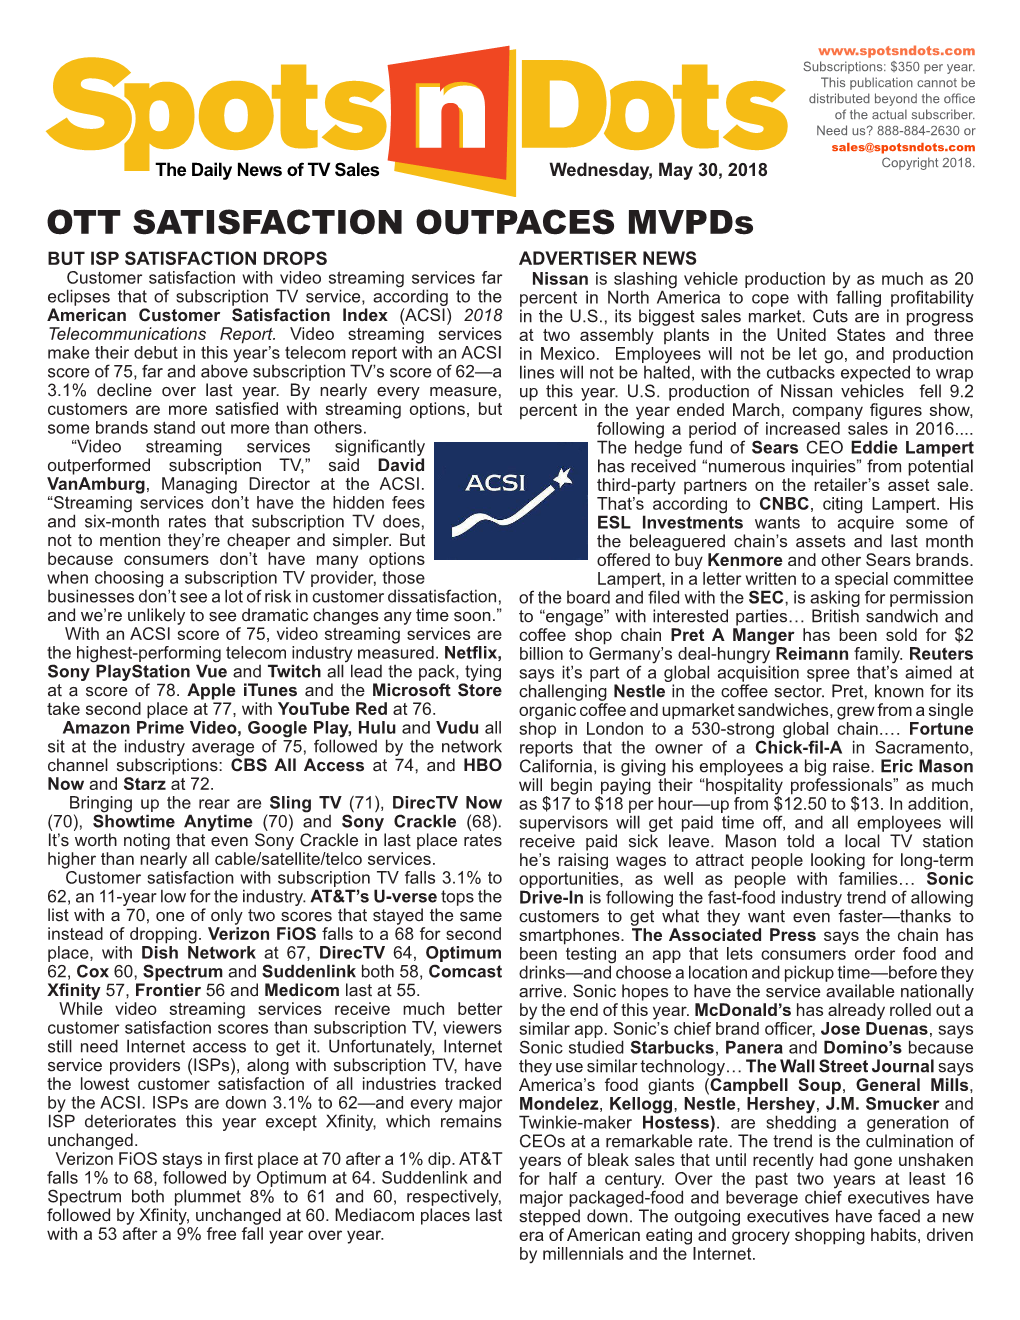 OTT SATISFACTION OUTPACES Mvpds